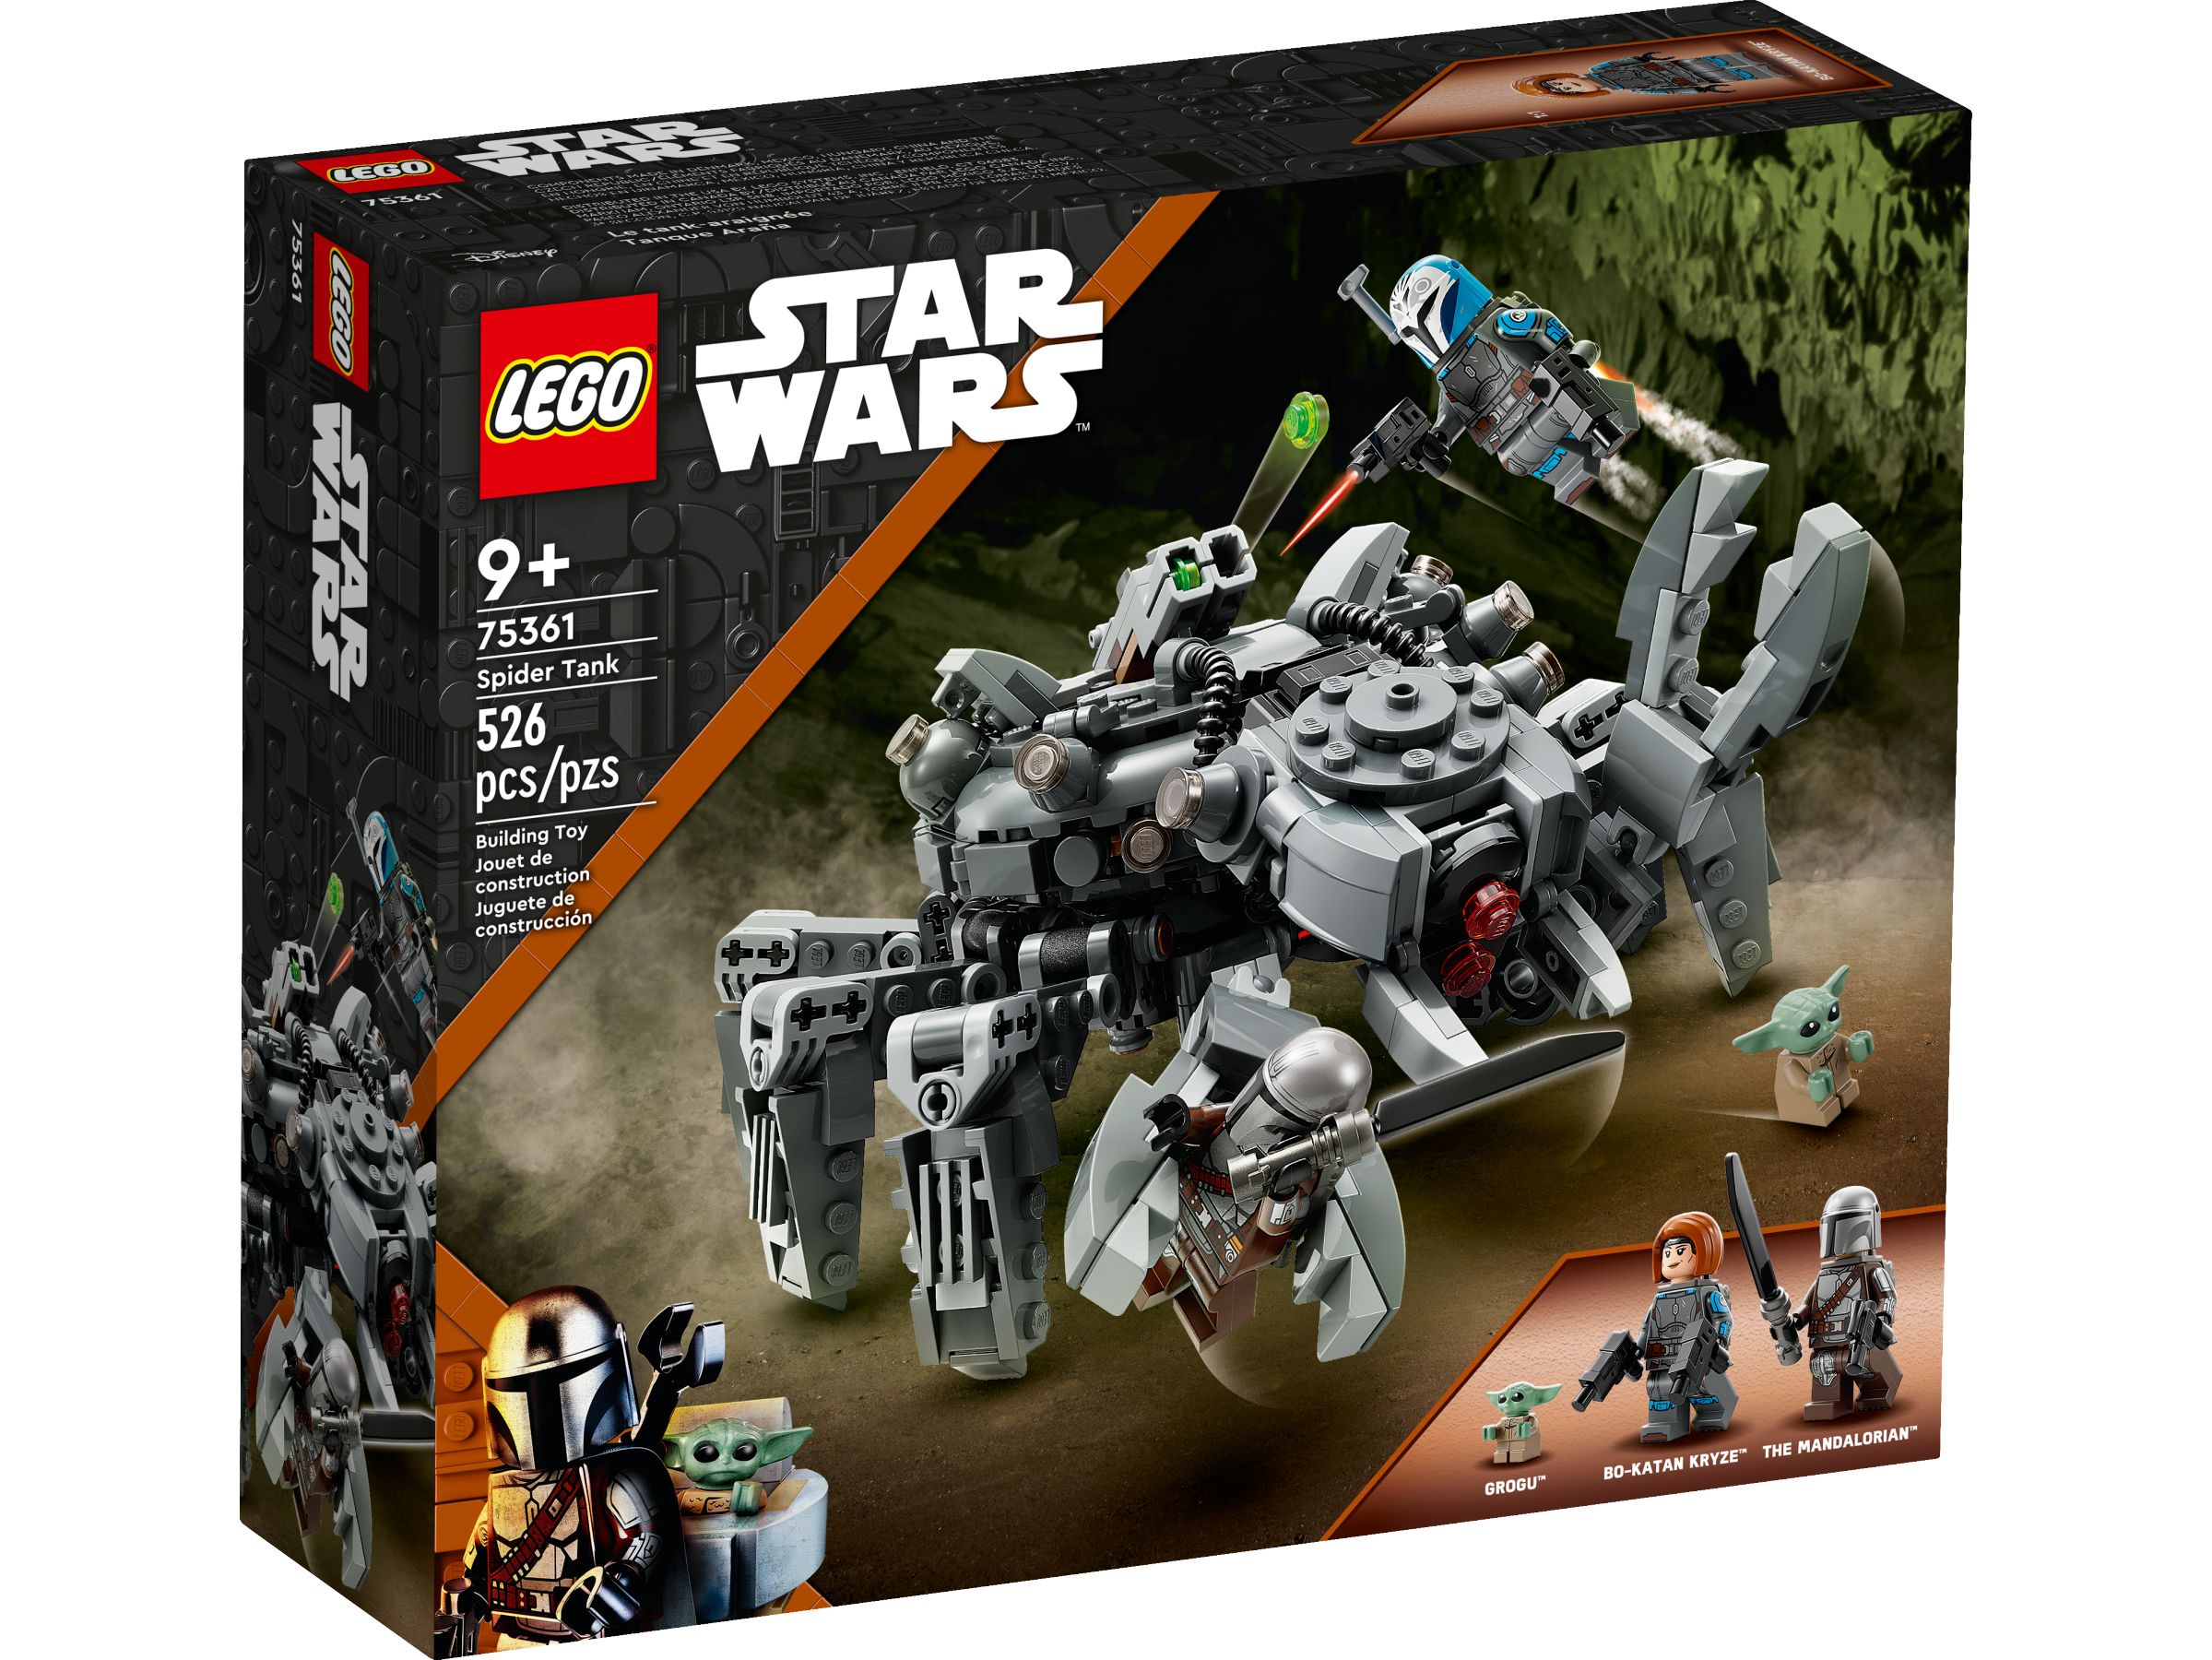 LEGO Star Wars 75361 Spinnenpanzer LEGO_75361_alt6.jpg